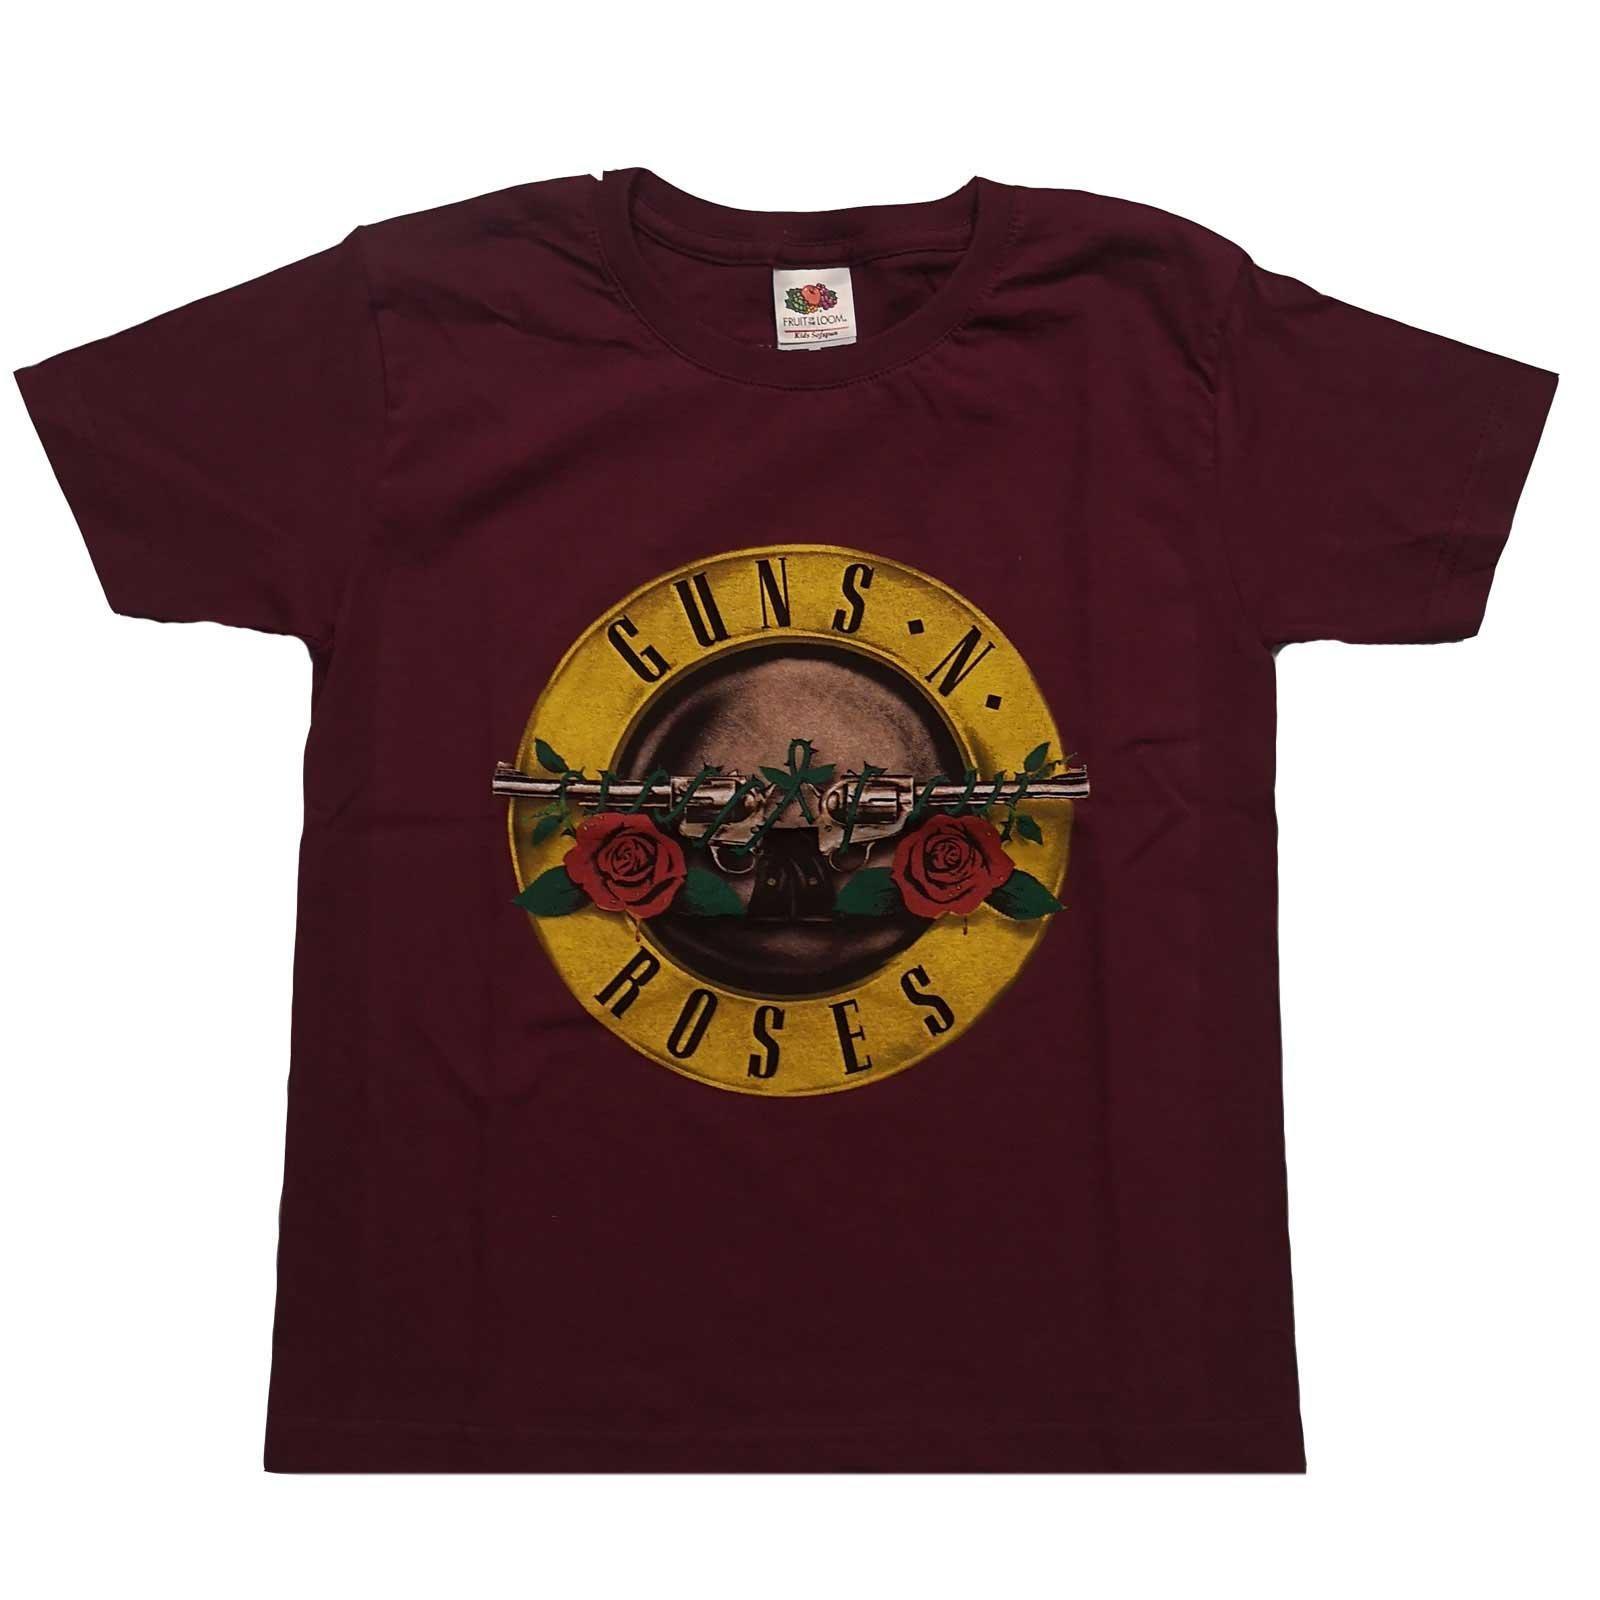 Tshirt Jungen Bordeaux 104 von Guns N Roses